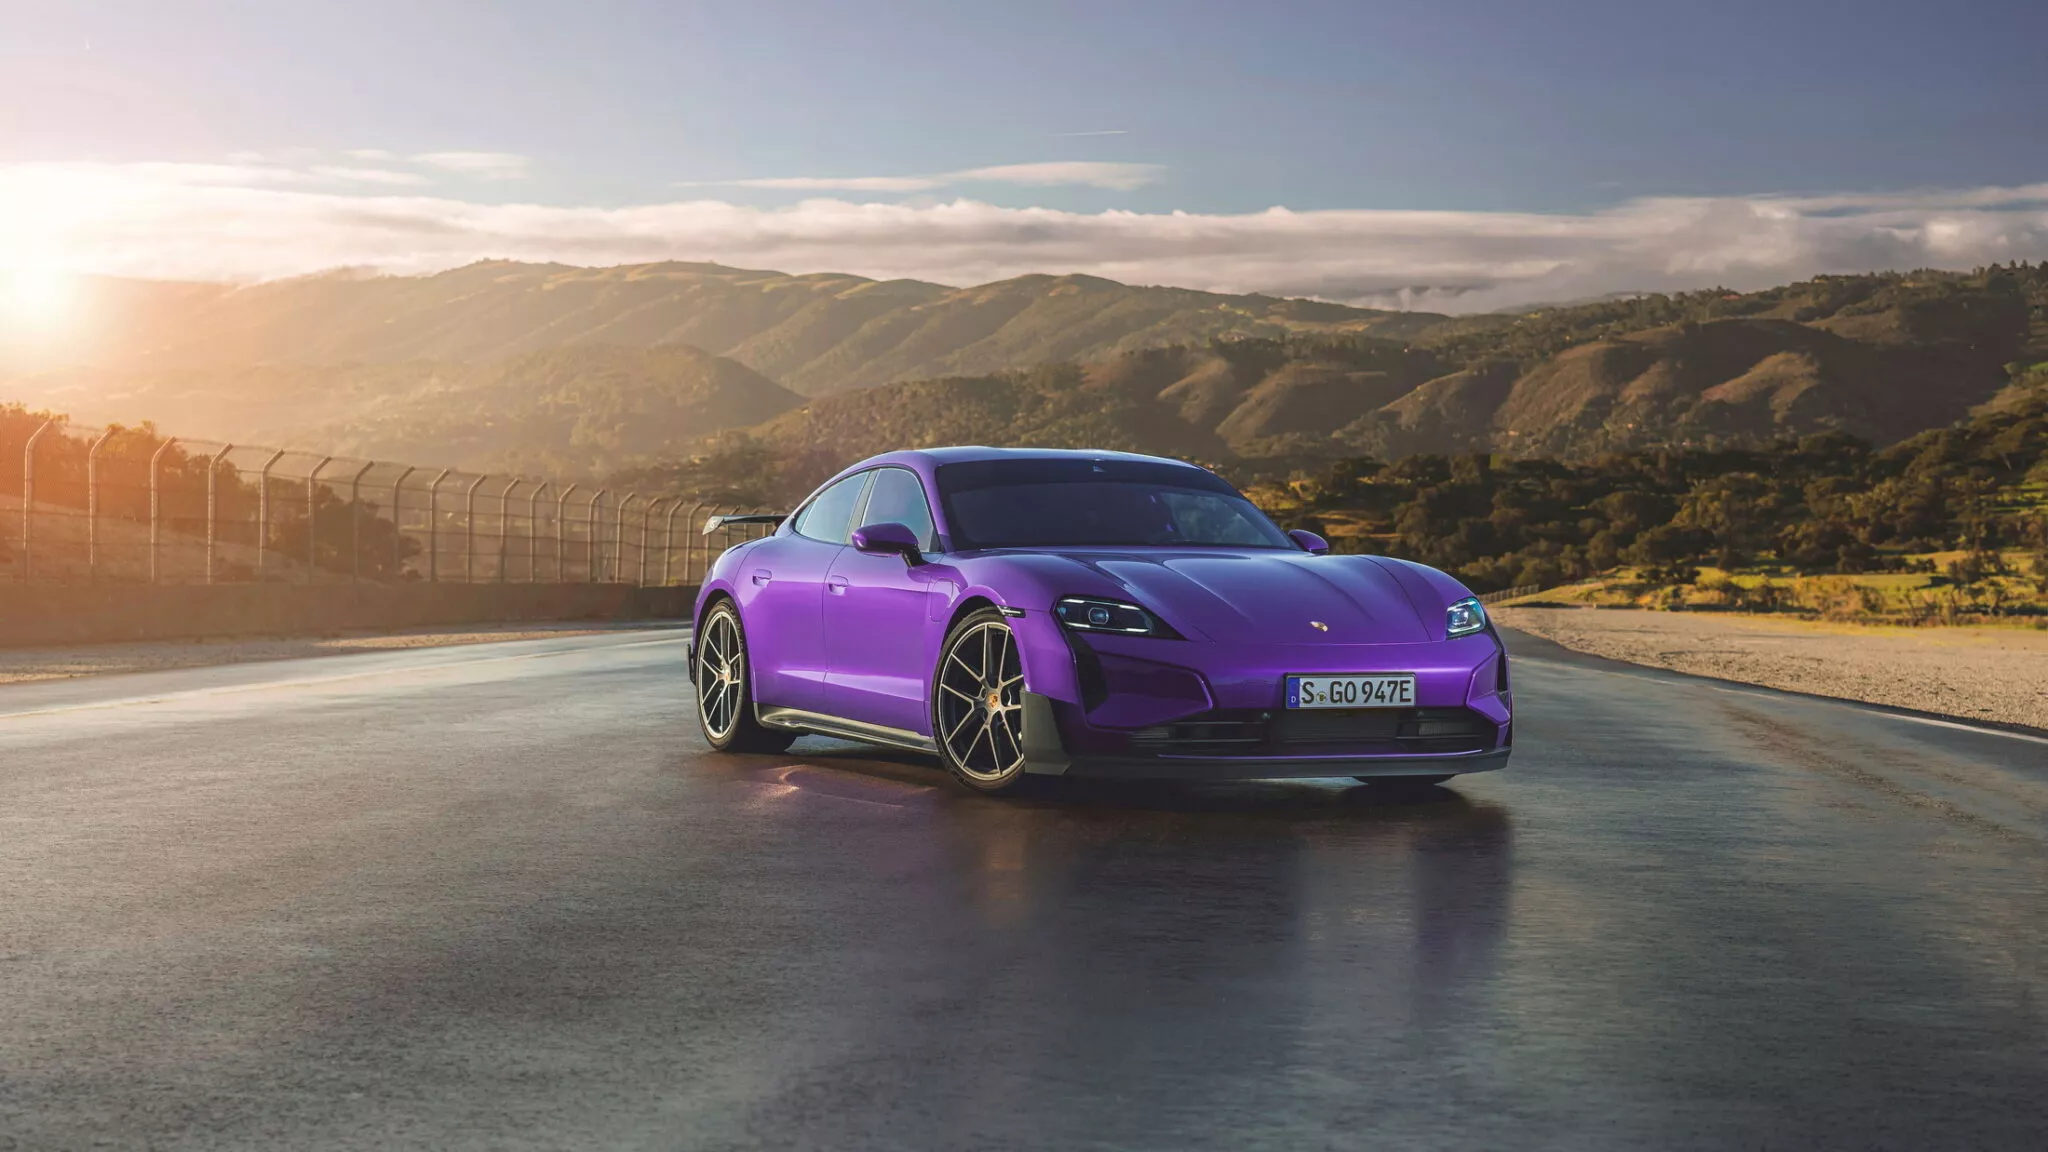 Siêu xe điện Porsche Taycan Turbo GT trình làng, mạnh 1.092 mã lực porsche-taycan-turbo-gt-sky-purple-metallic-1-2048x1152.webp